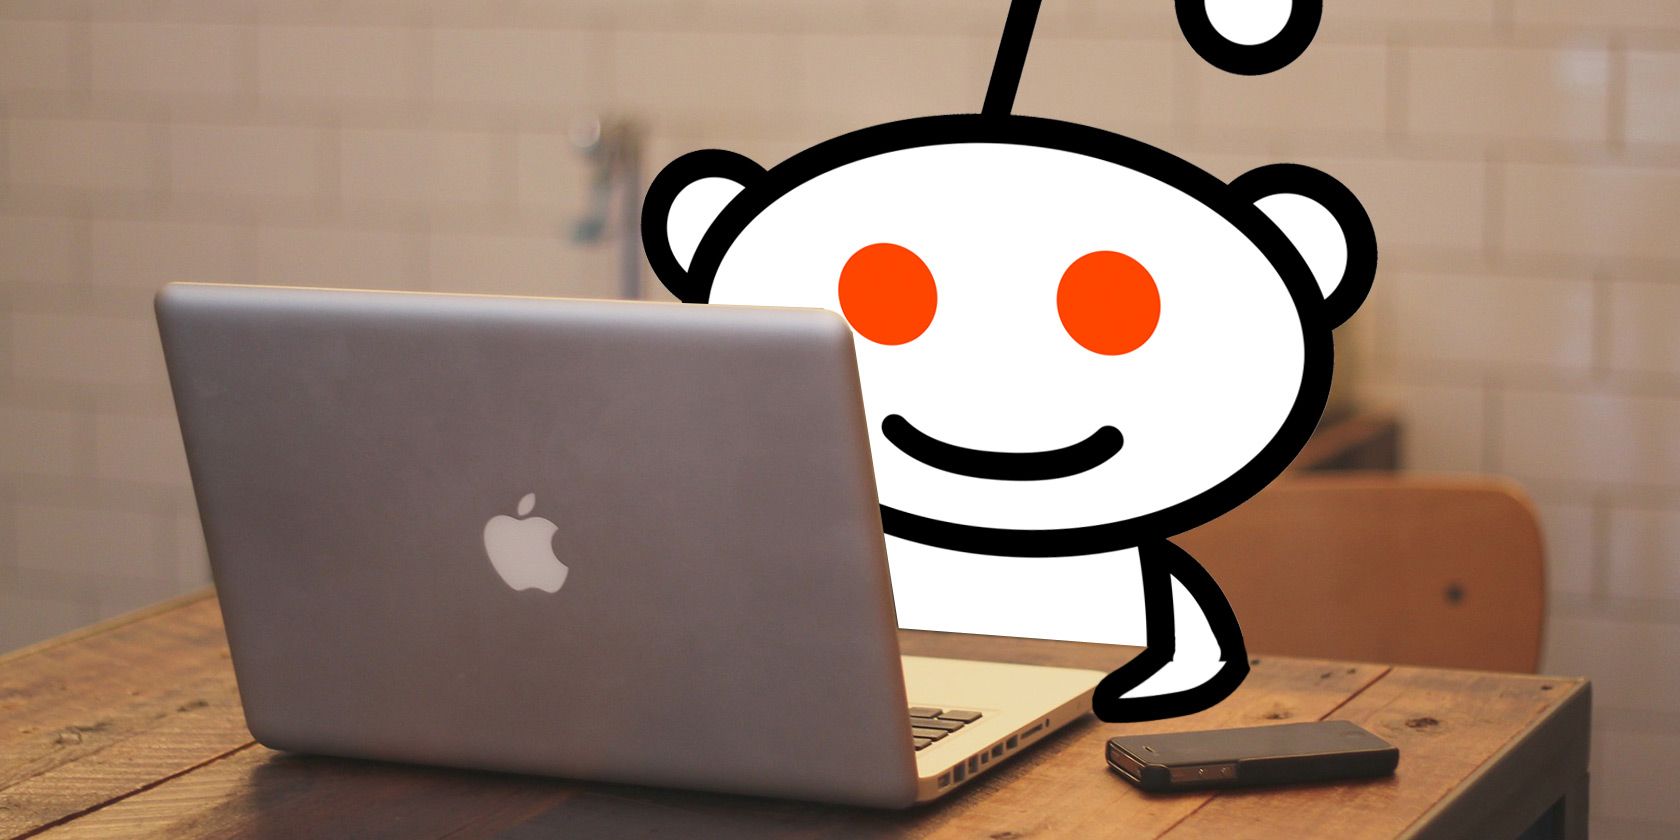 Using Reddit on a Mac